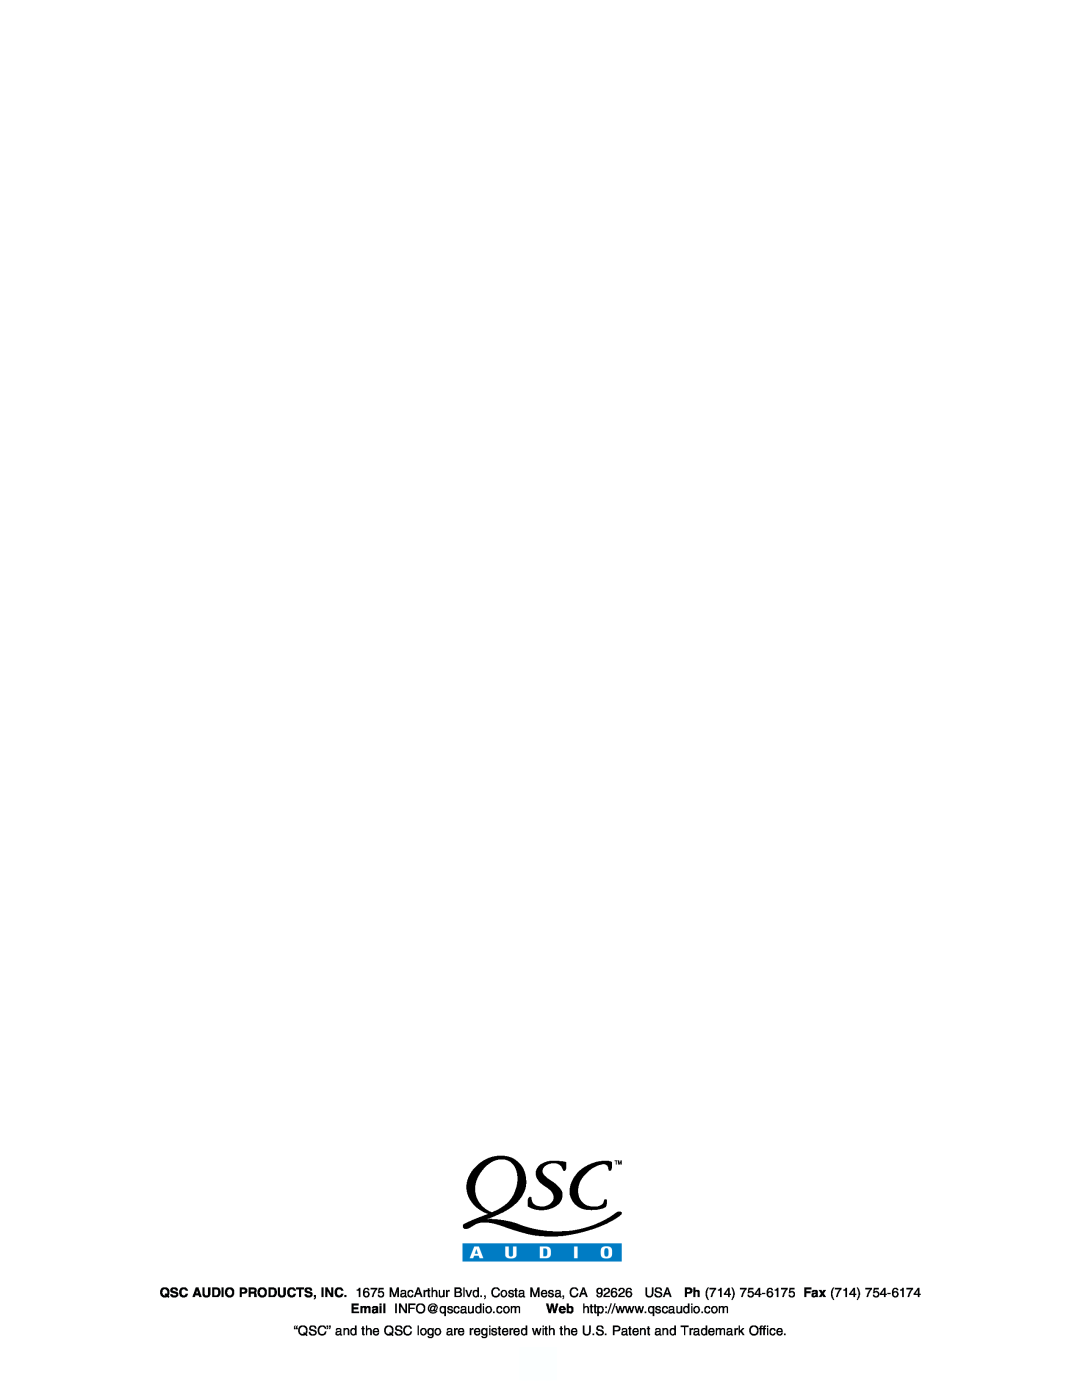 QSC Audio SUBWOOFER FILTER QSC AUDIO PRODUCTS, INC. 1675 MacArthur Blvd., Costa Mesa, CA 92626 USA Ph 714 754-6175 Fax 